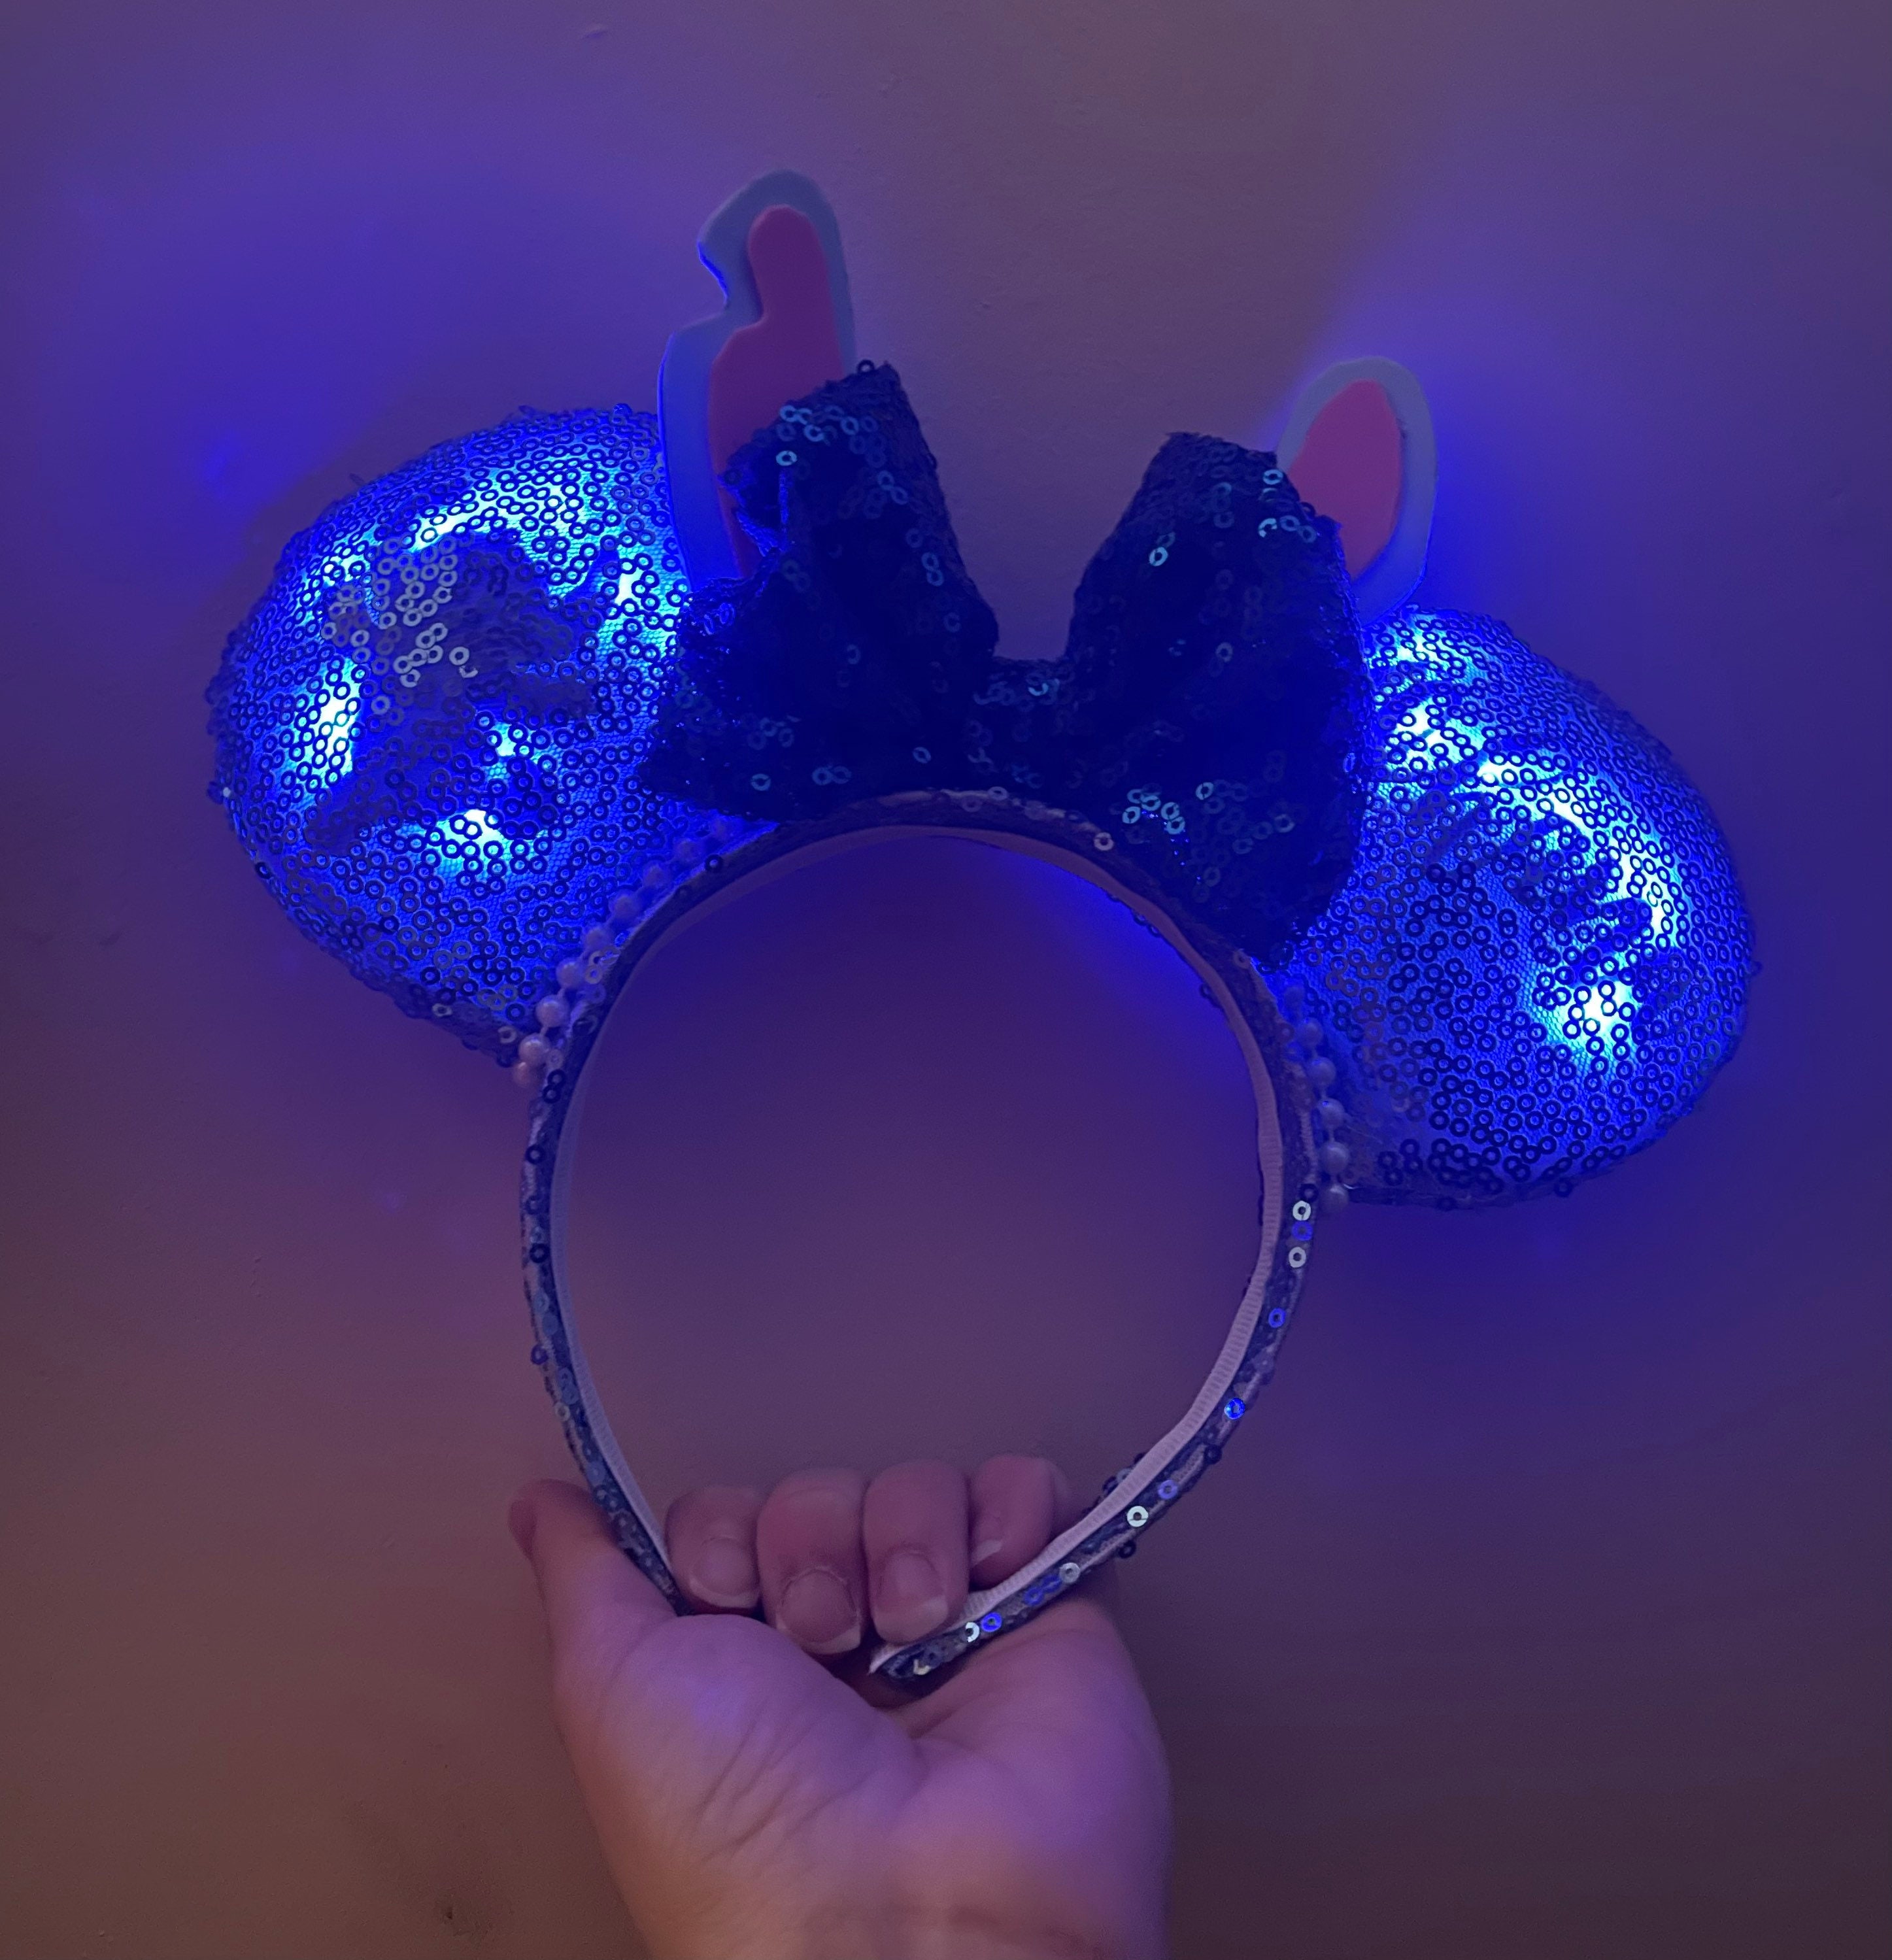 NWT Disney Parks Lilo & Stitch 3D Ears Scrunchie Hair Set Girls